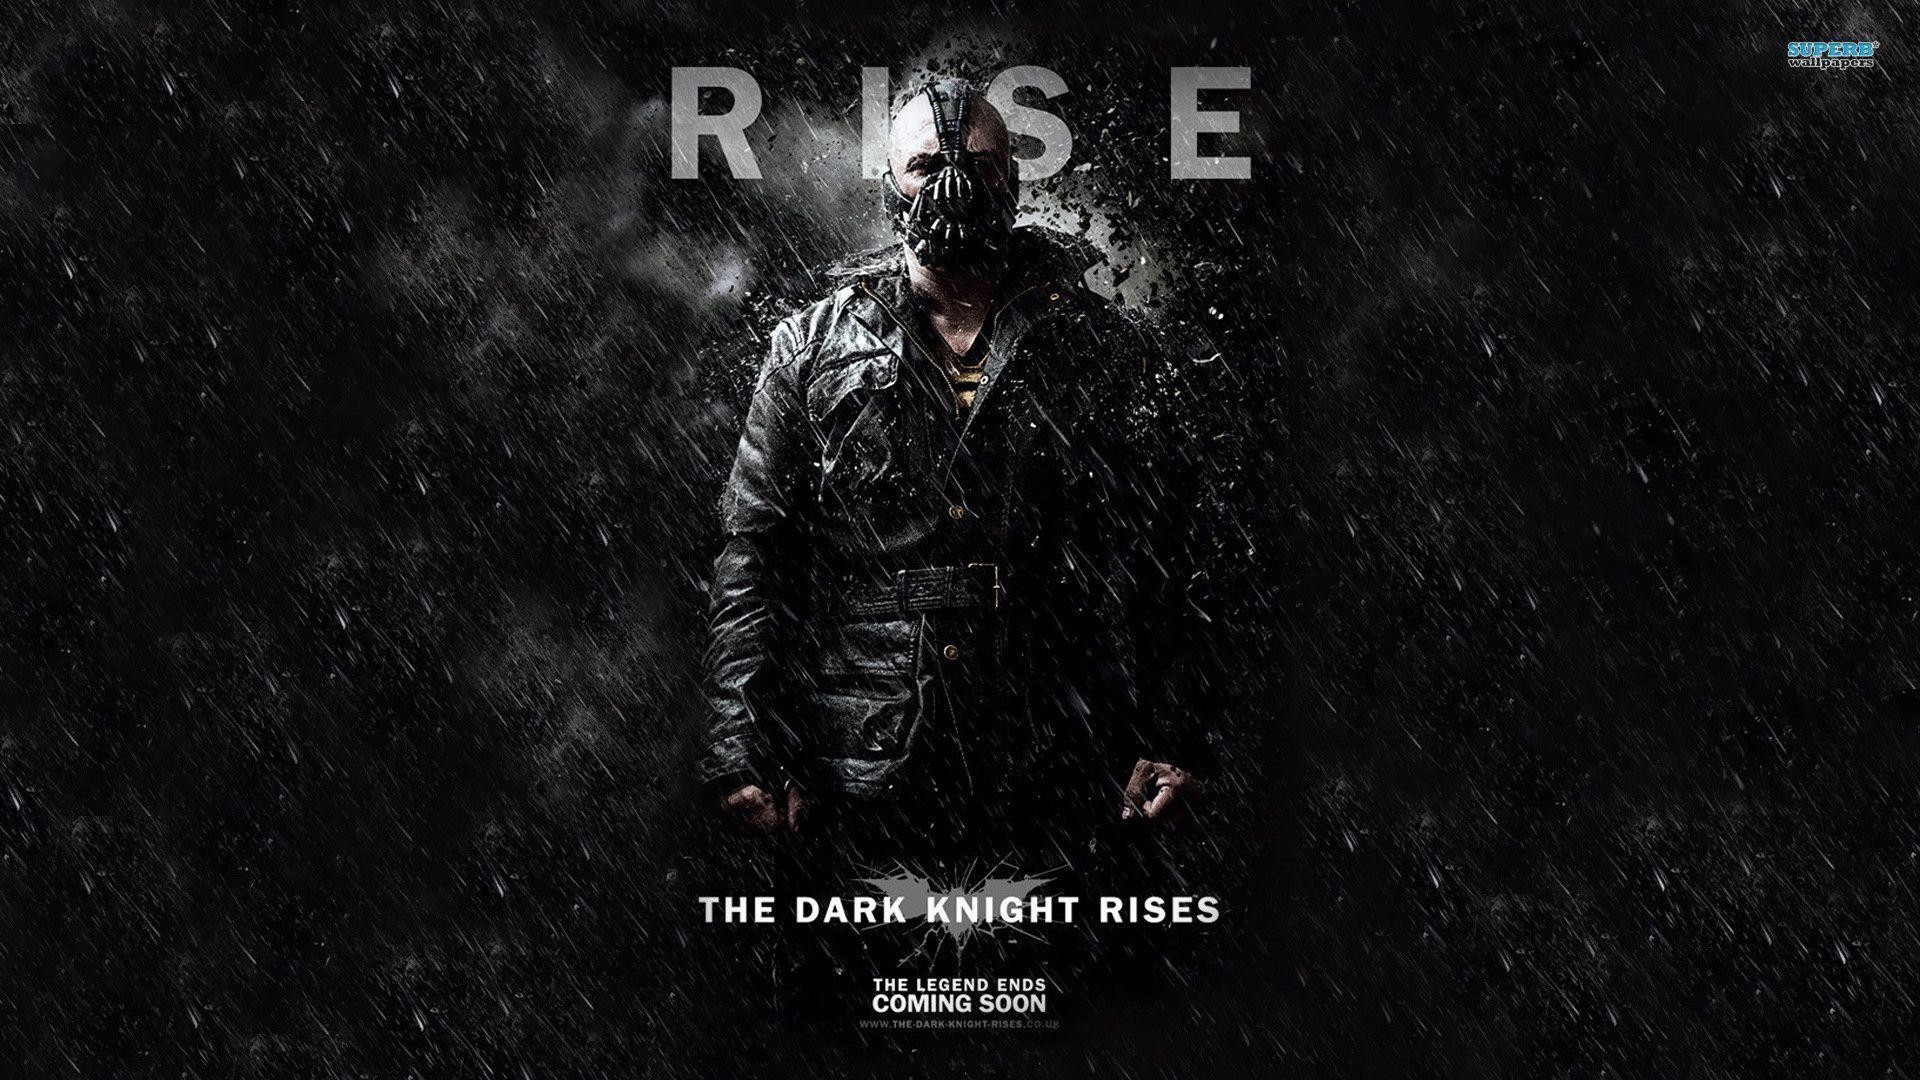 1920x1080 Bane - The Dark Knight Rises wallpaper - Movie wallpapers - #